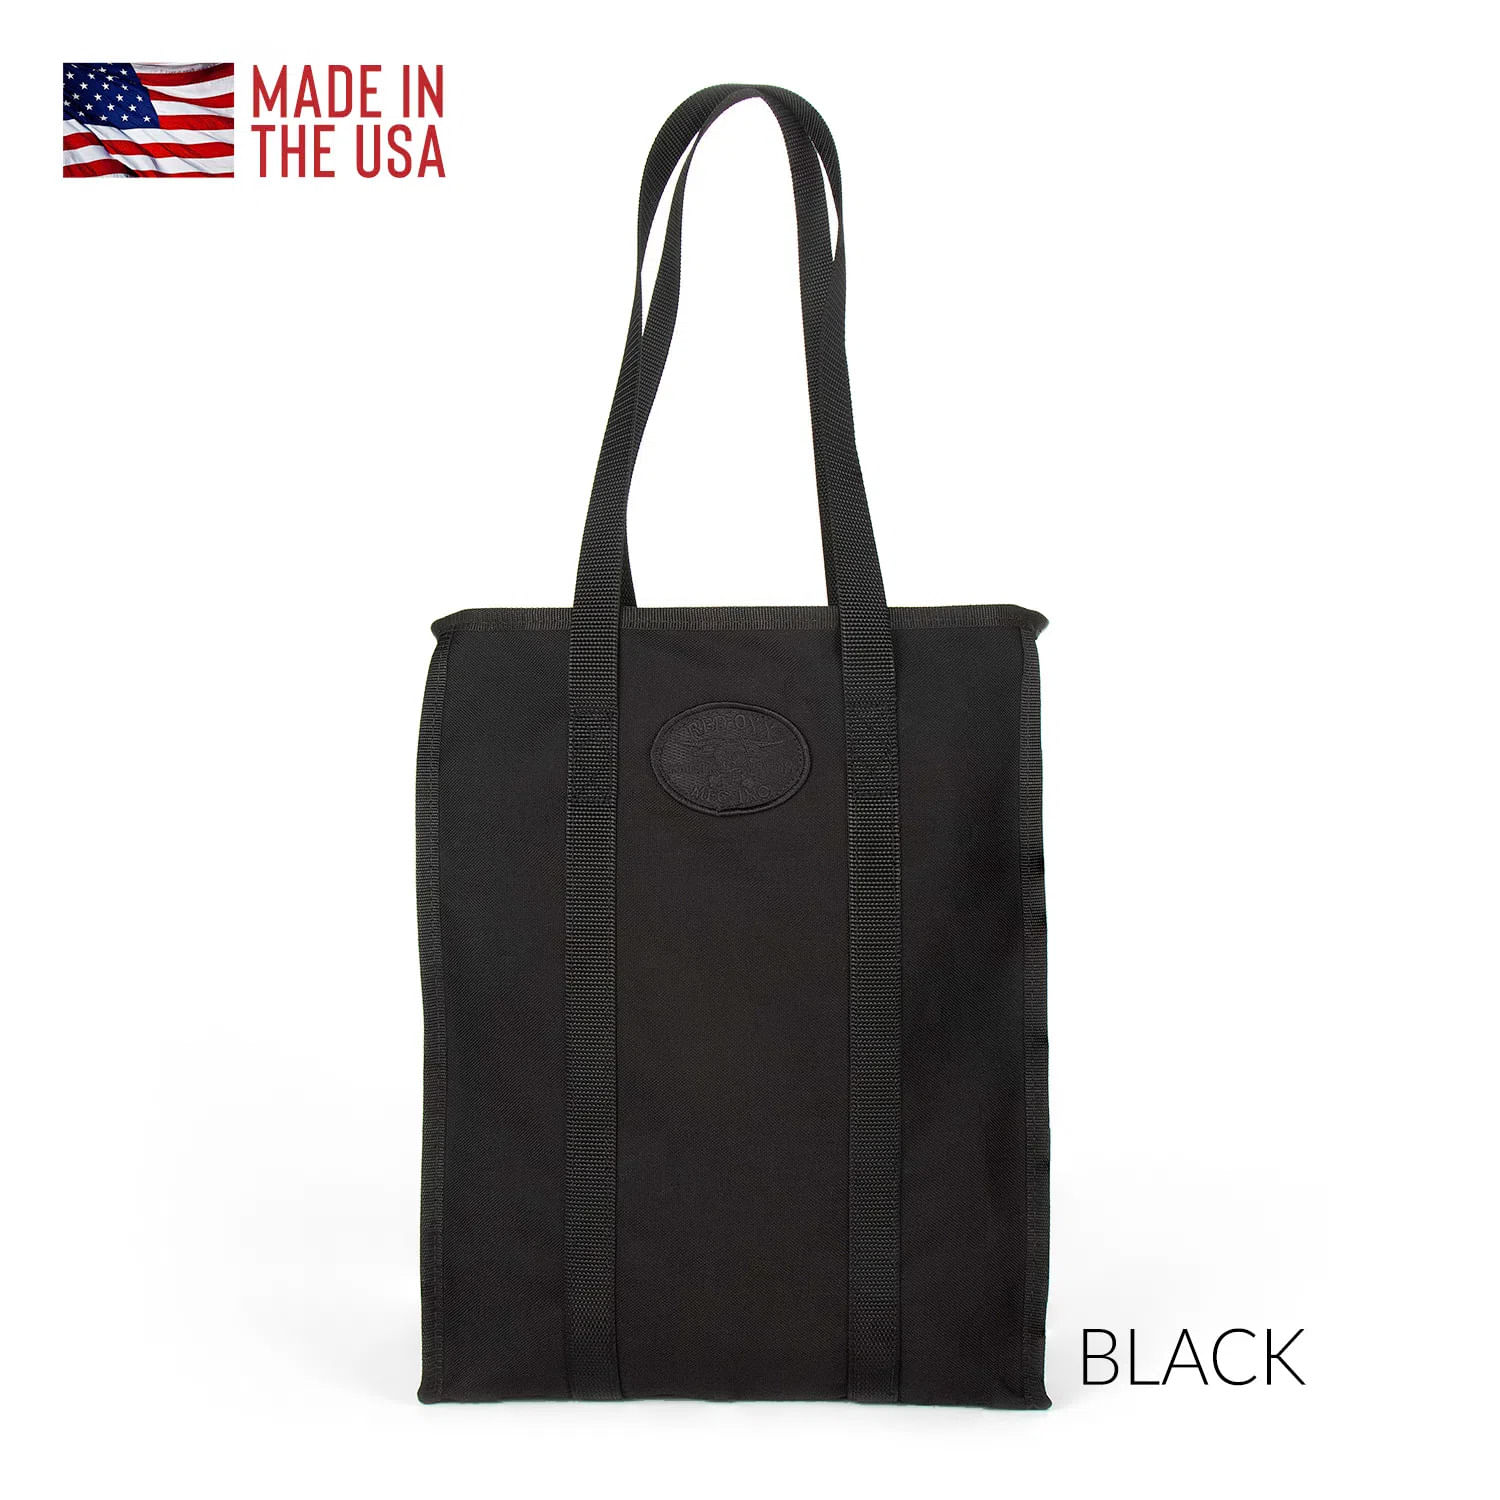 Black nylon shopper bag